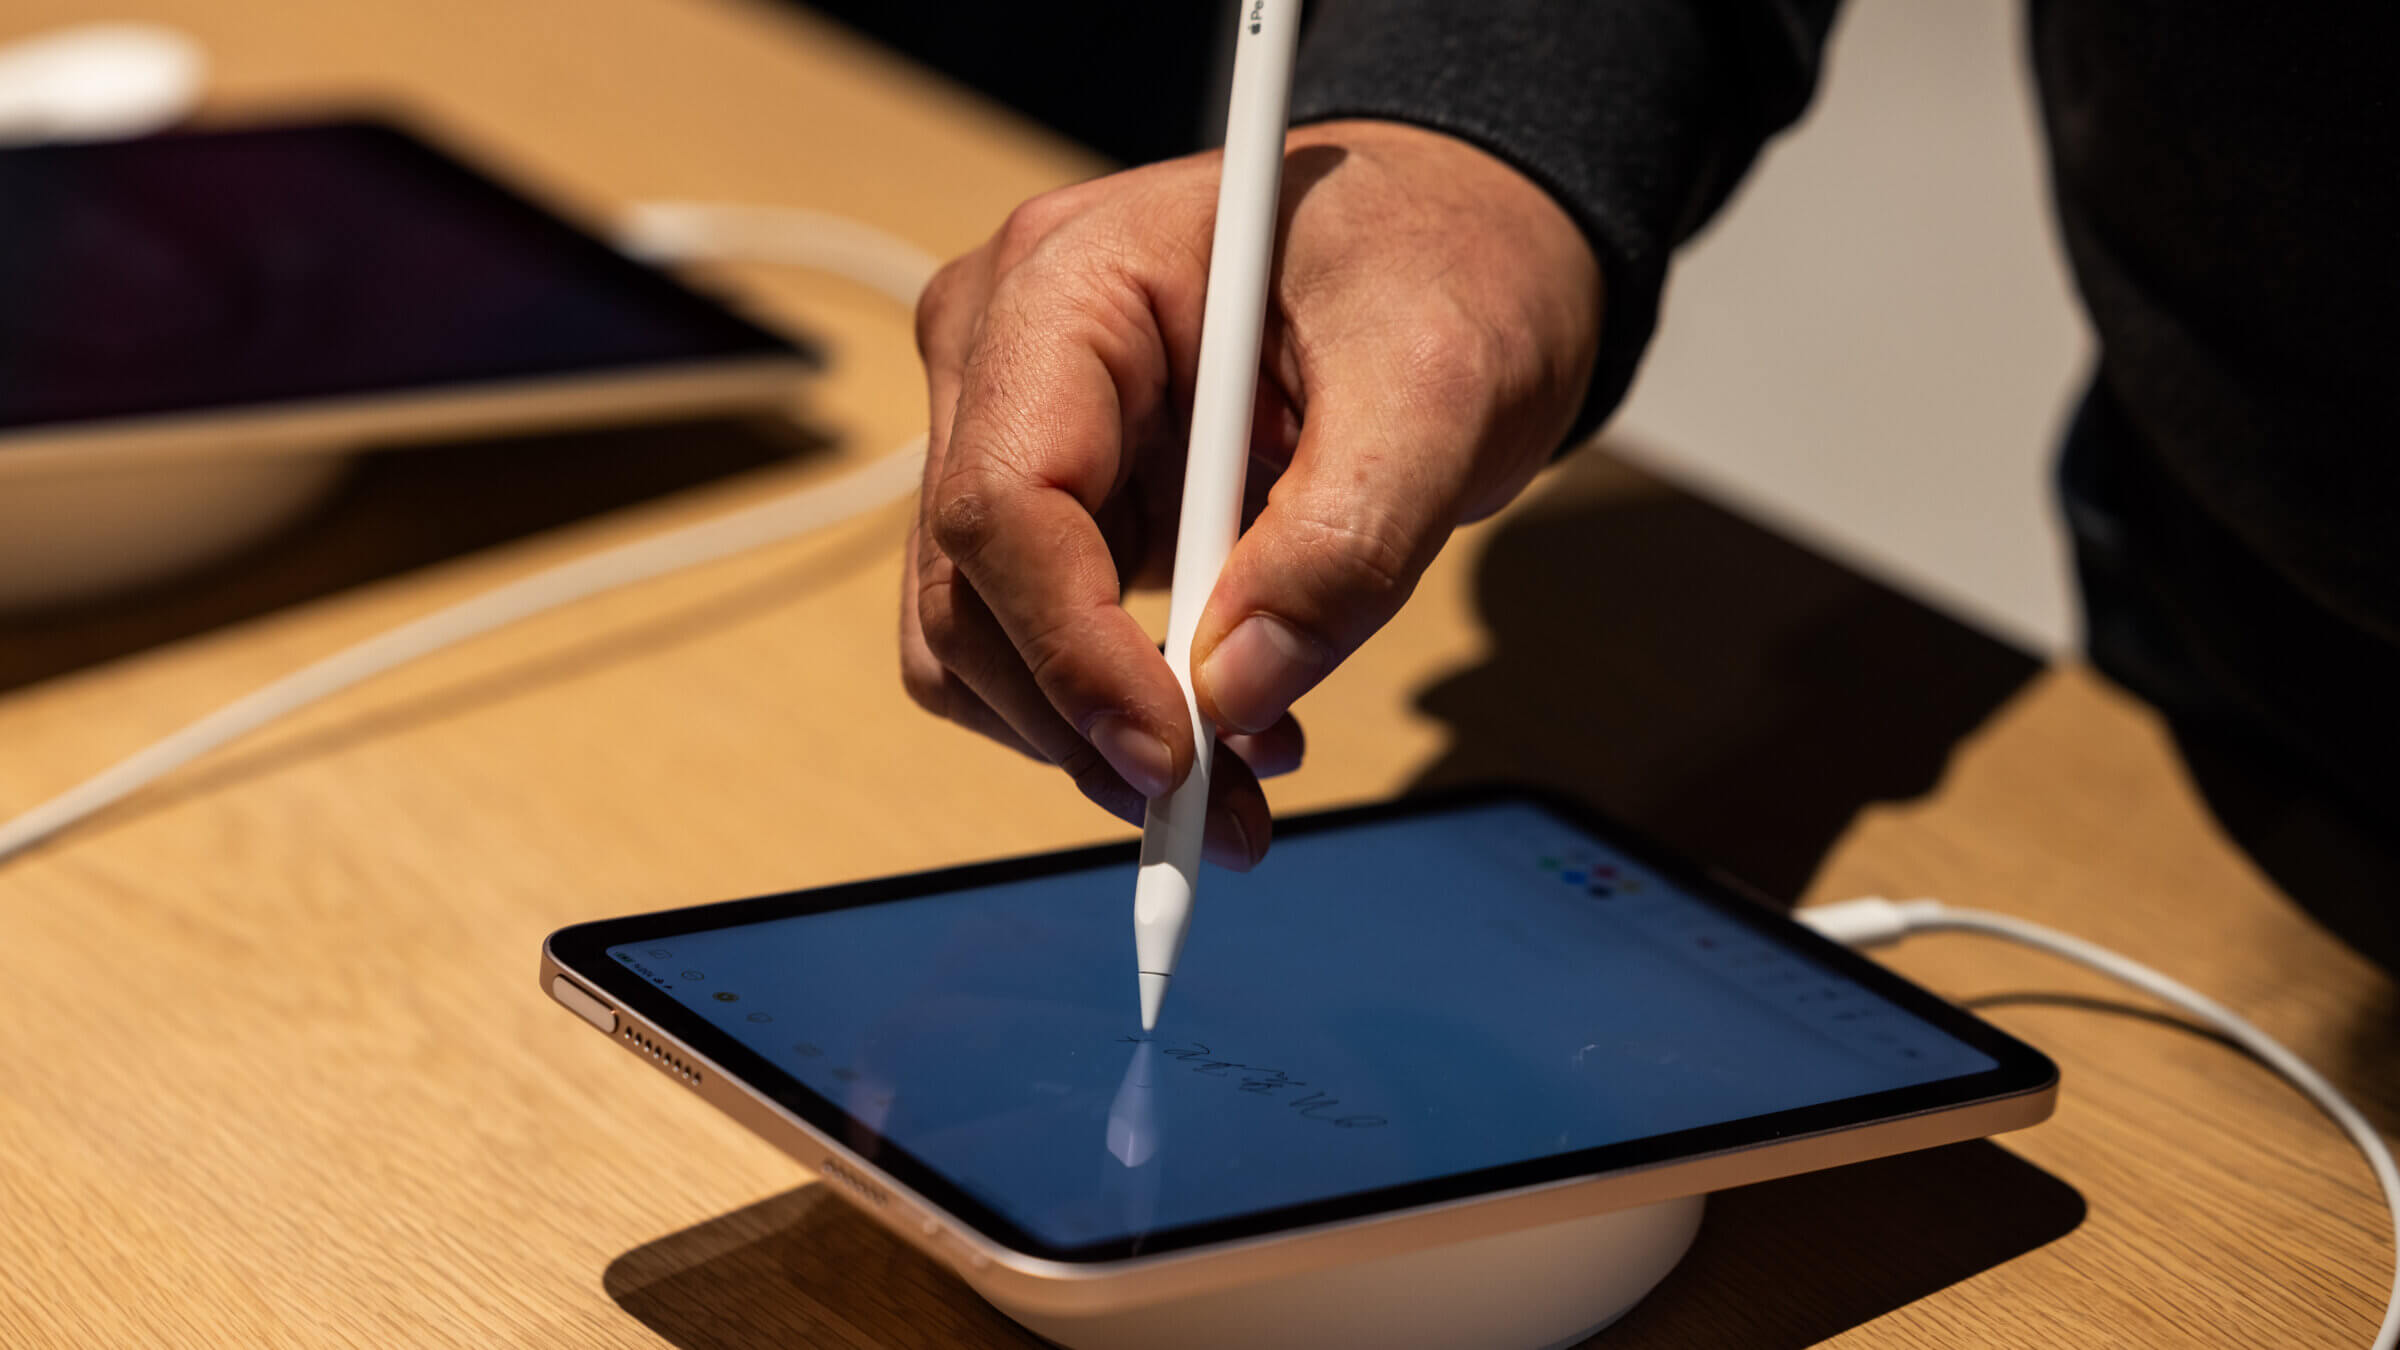 Would Walter Benjamin be part of the iPad generation?